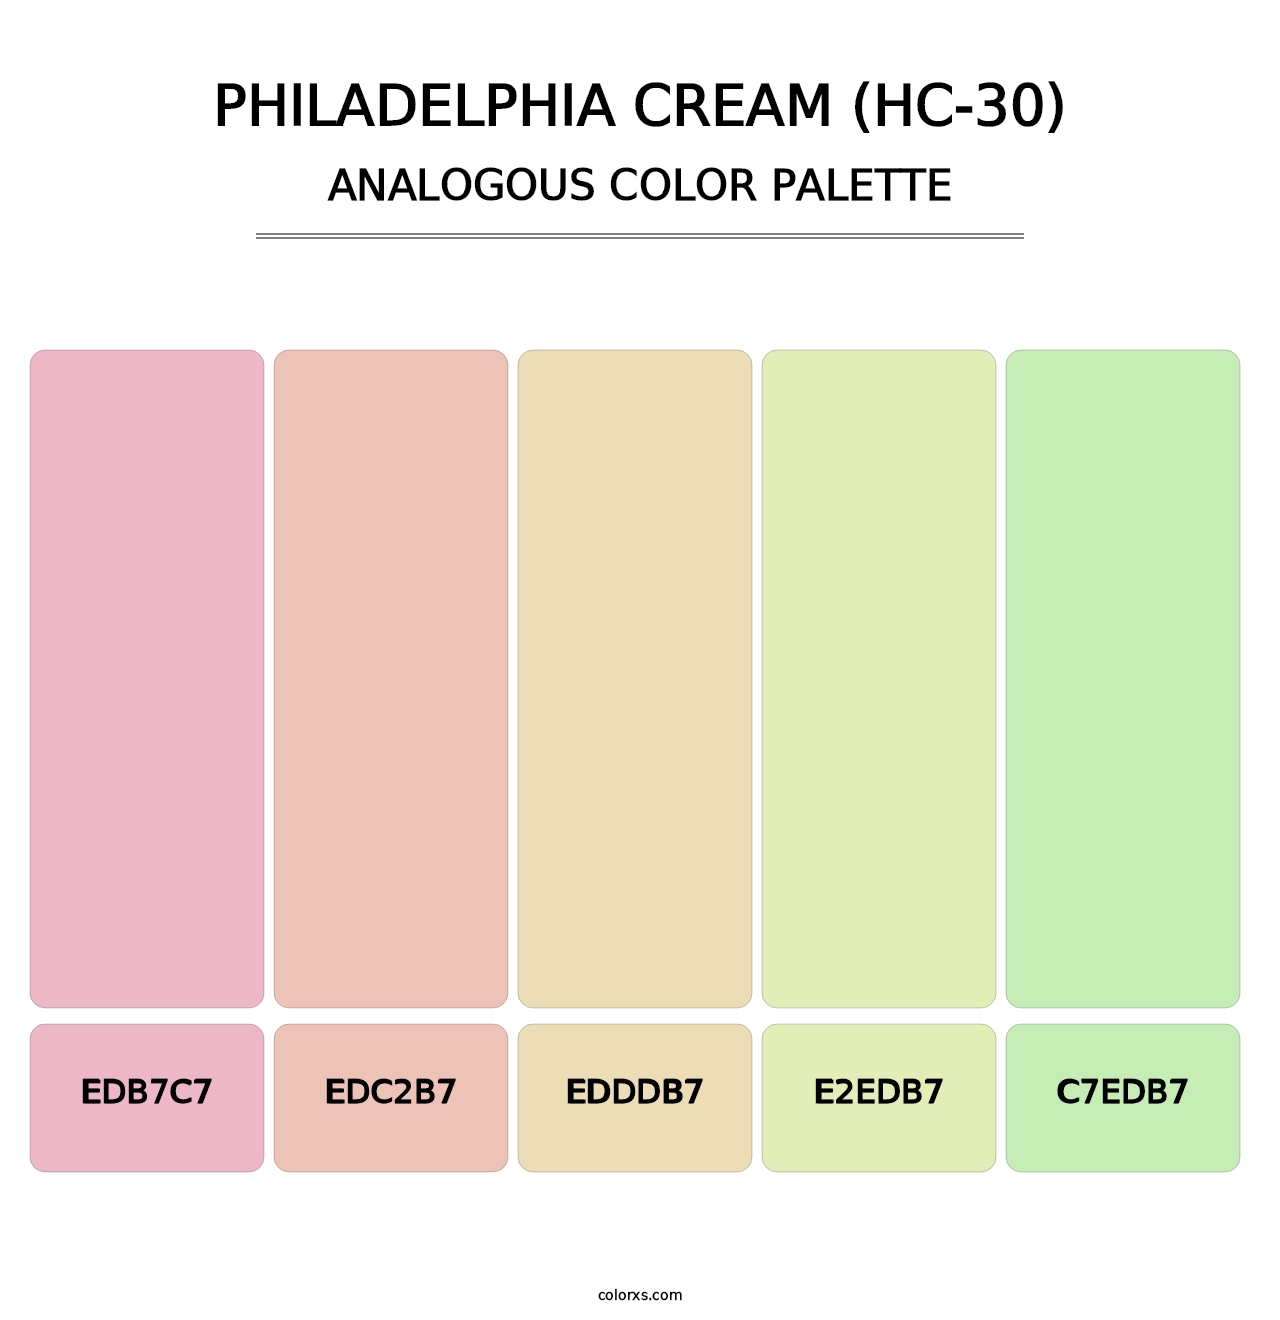 Philadelphia Cream (HC-30) - Analogous Color Palette